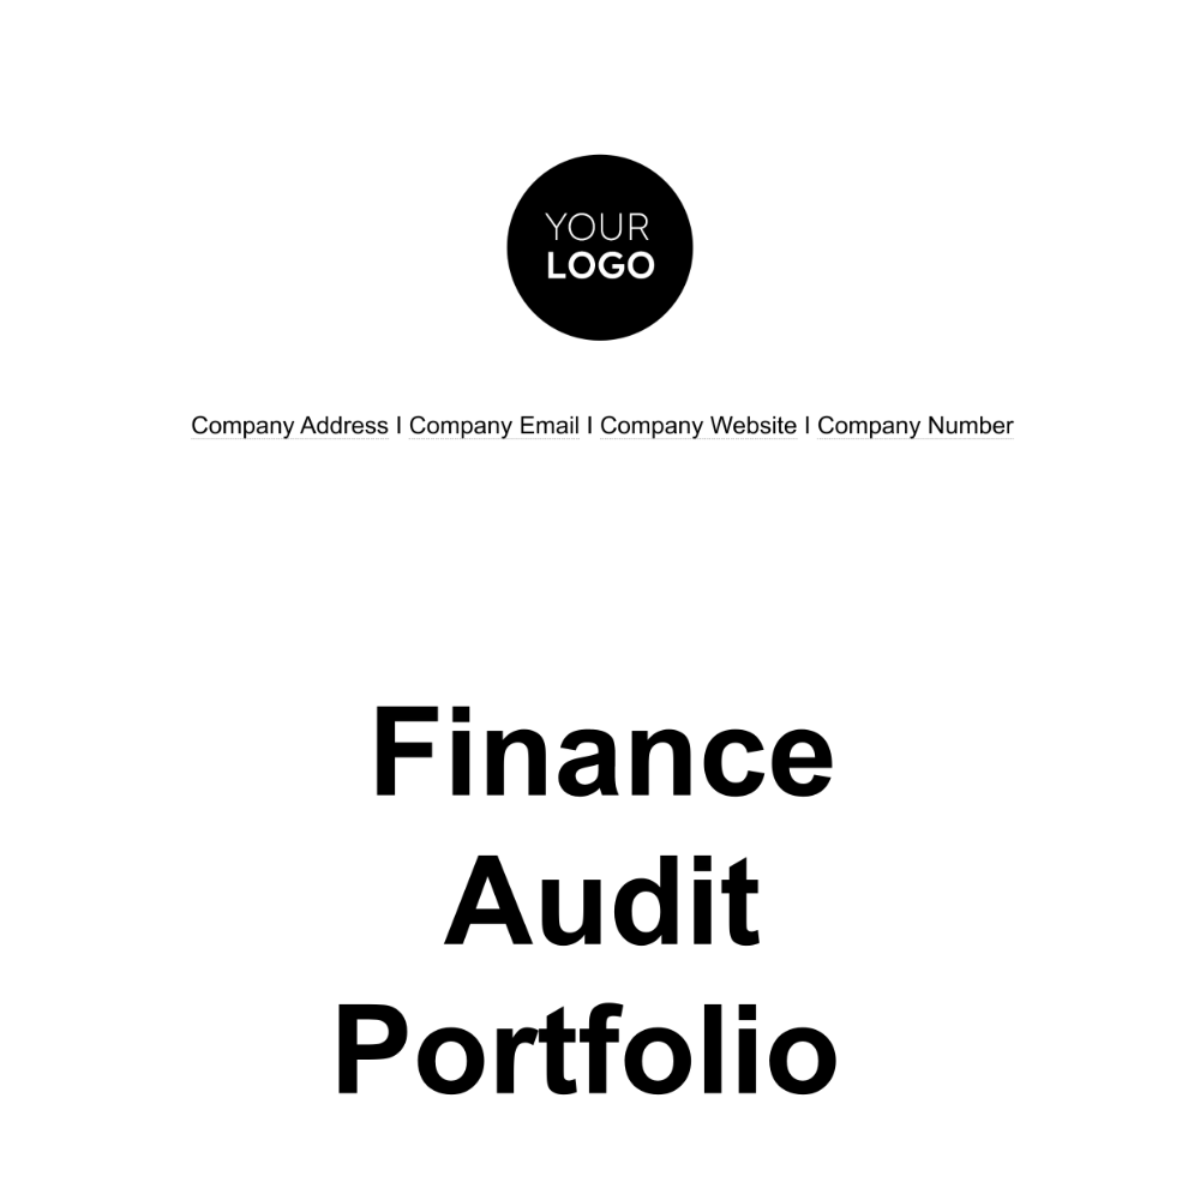 Free Finance Audit Portfolio Template